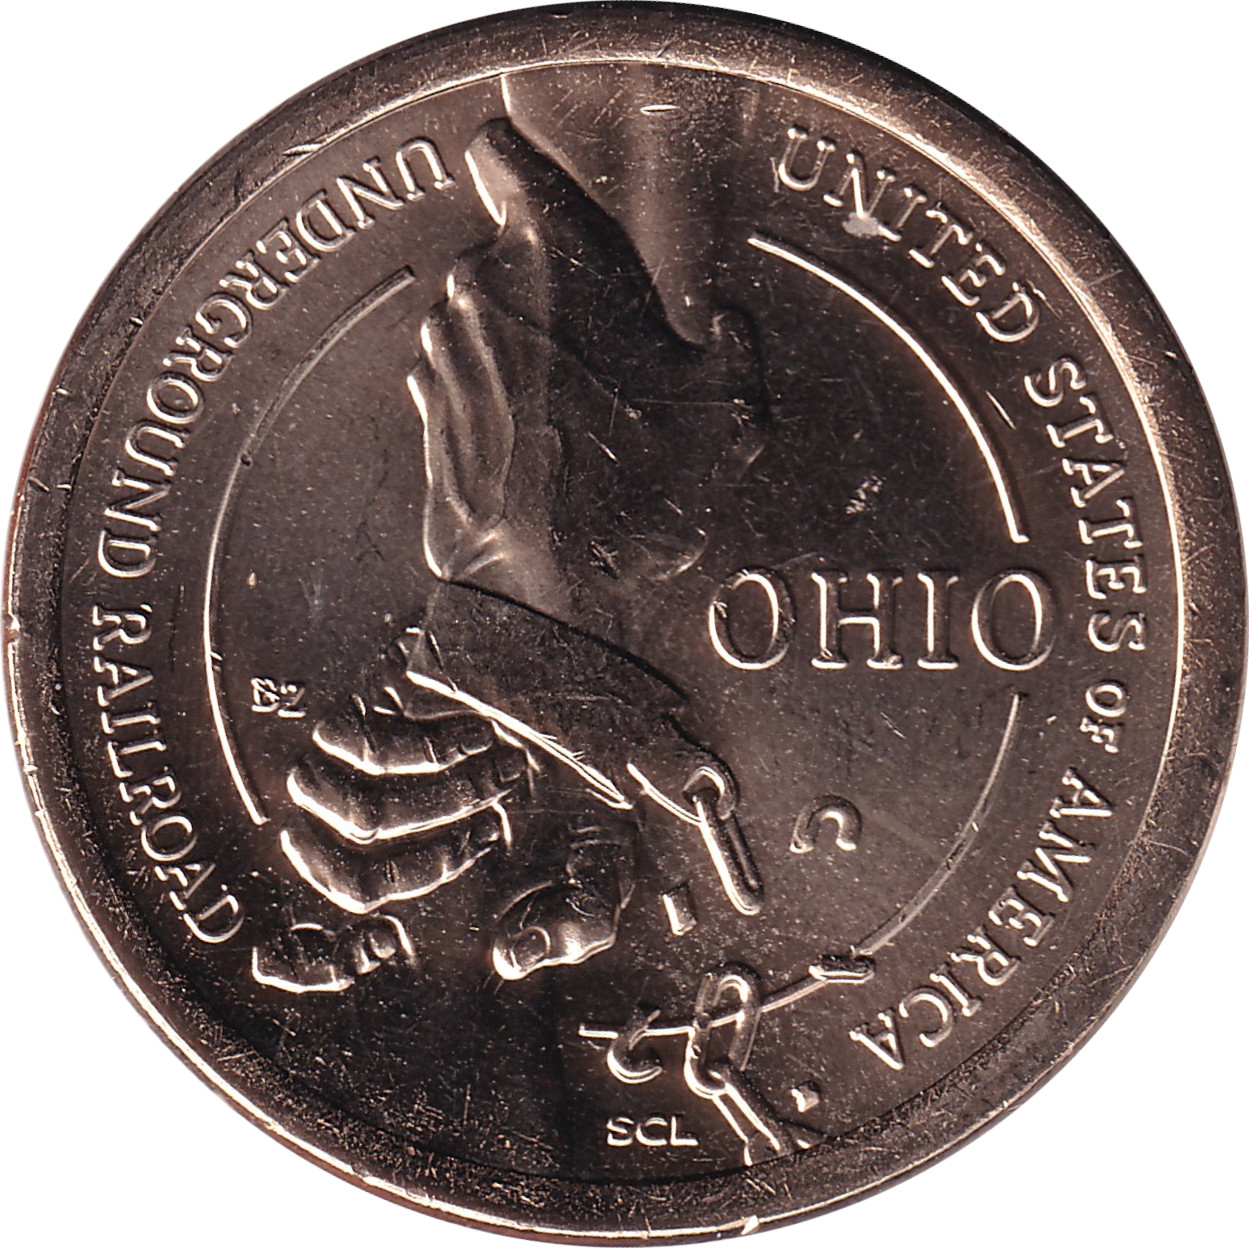 1 dollar - Ohio